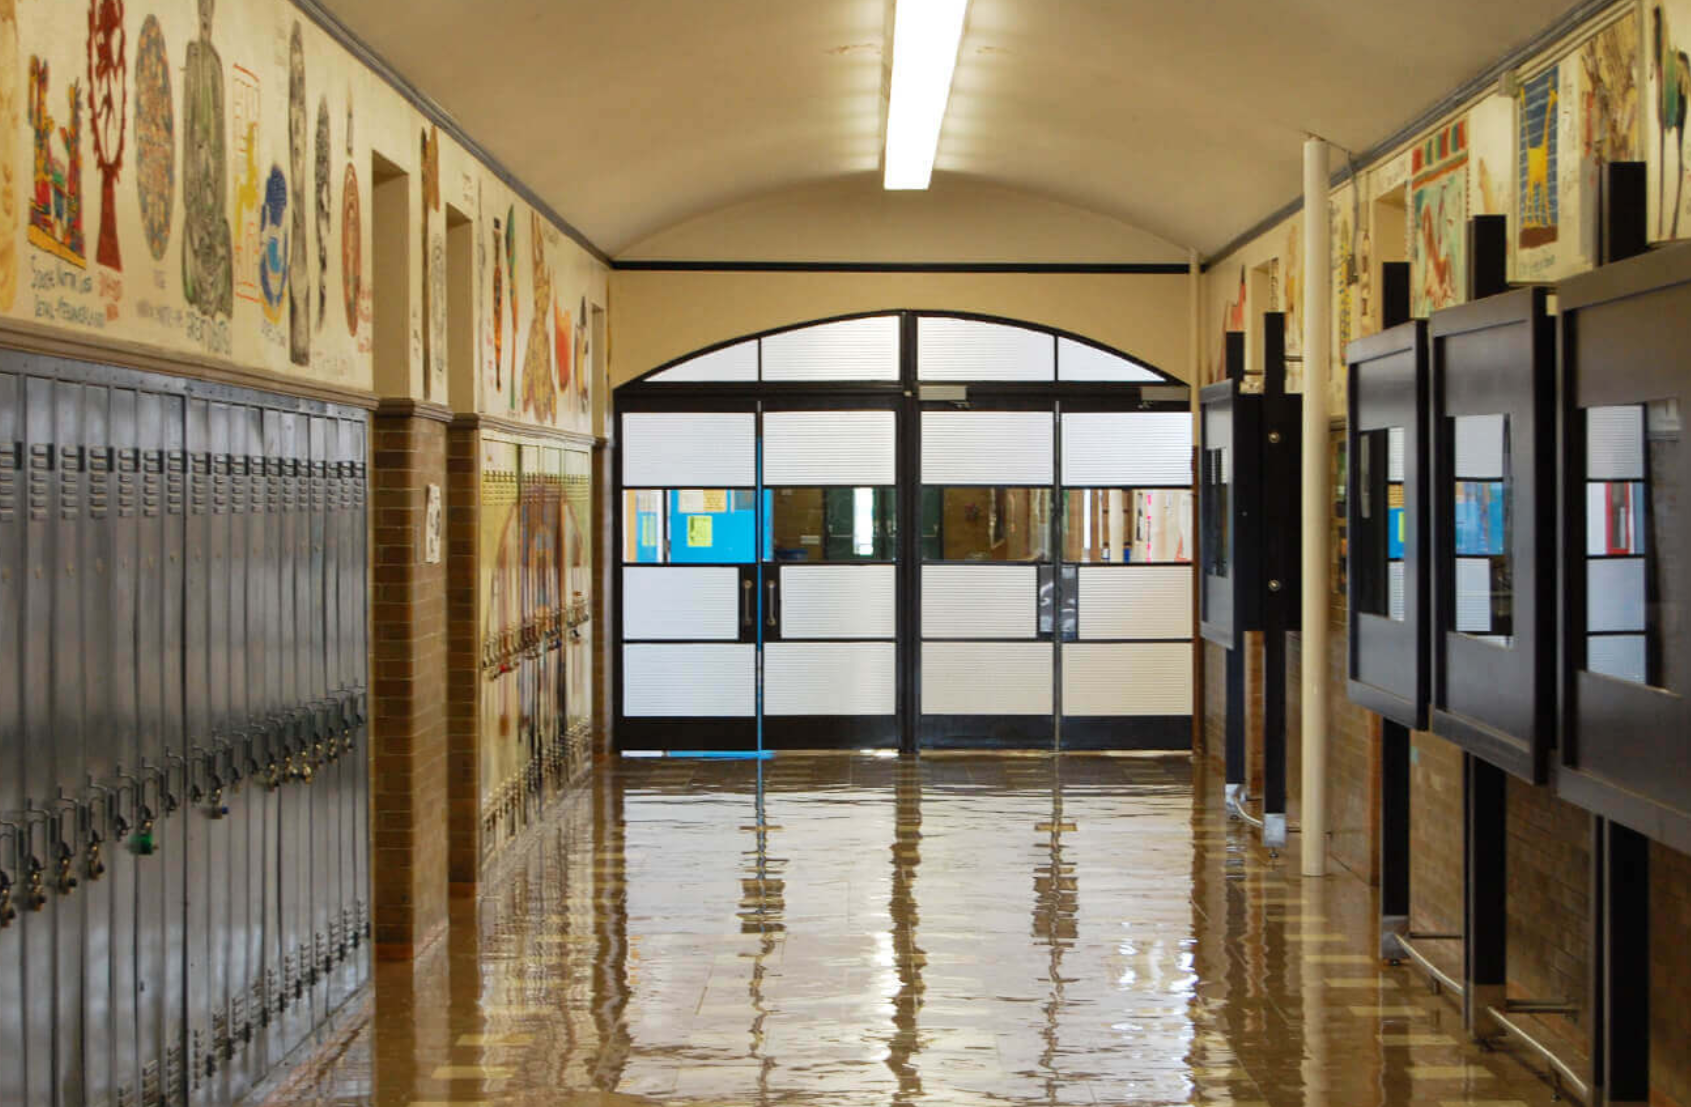 Ursula Franklin Academy hallway